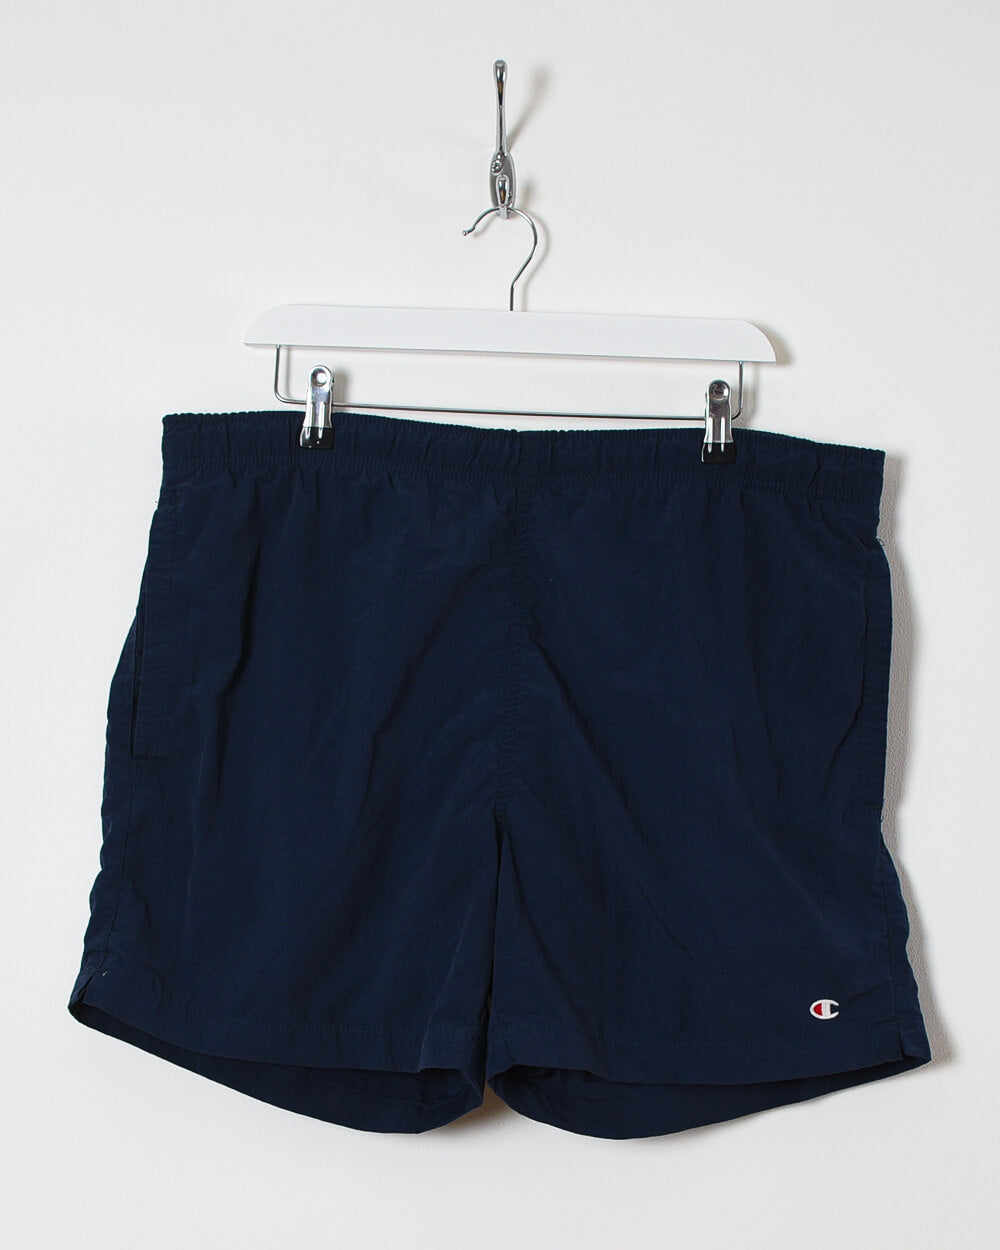 Champion Swimwear Shorts - W38 - Domno Vintage 90s, 80s, 00s Retro and Vintage Clothing 